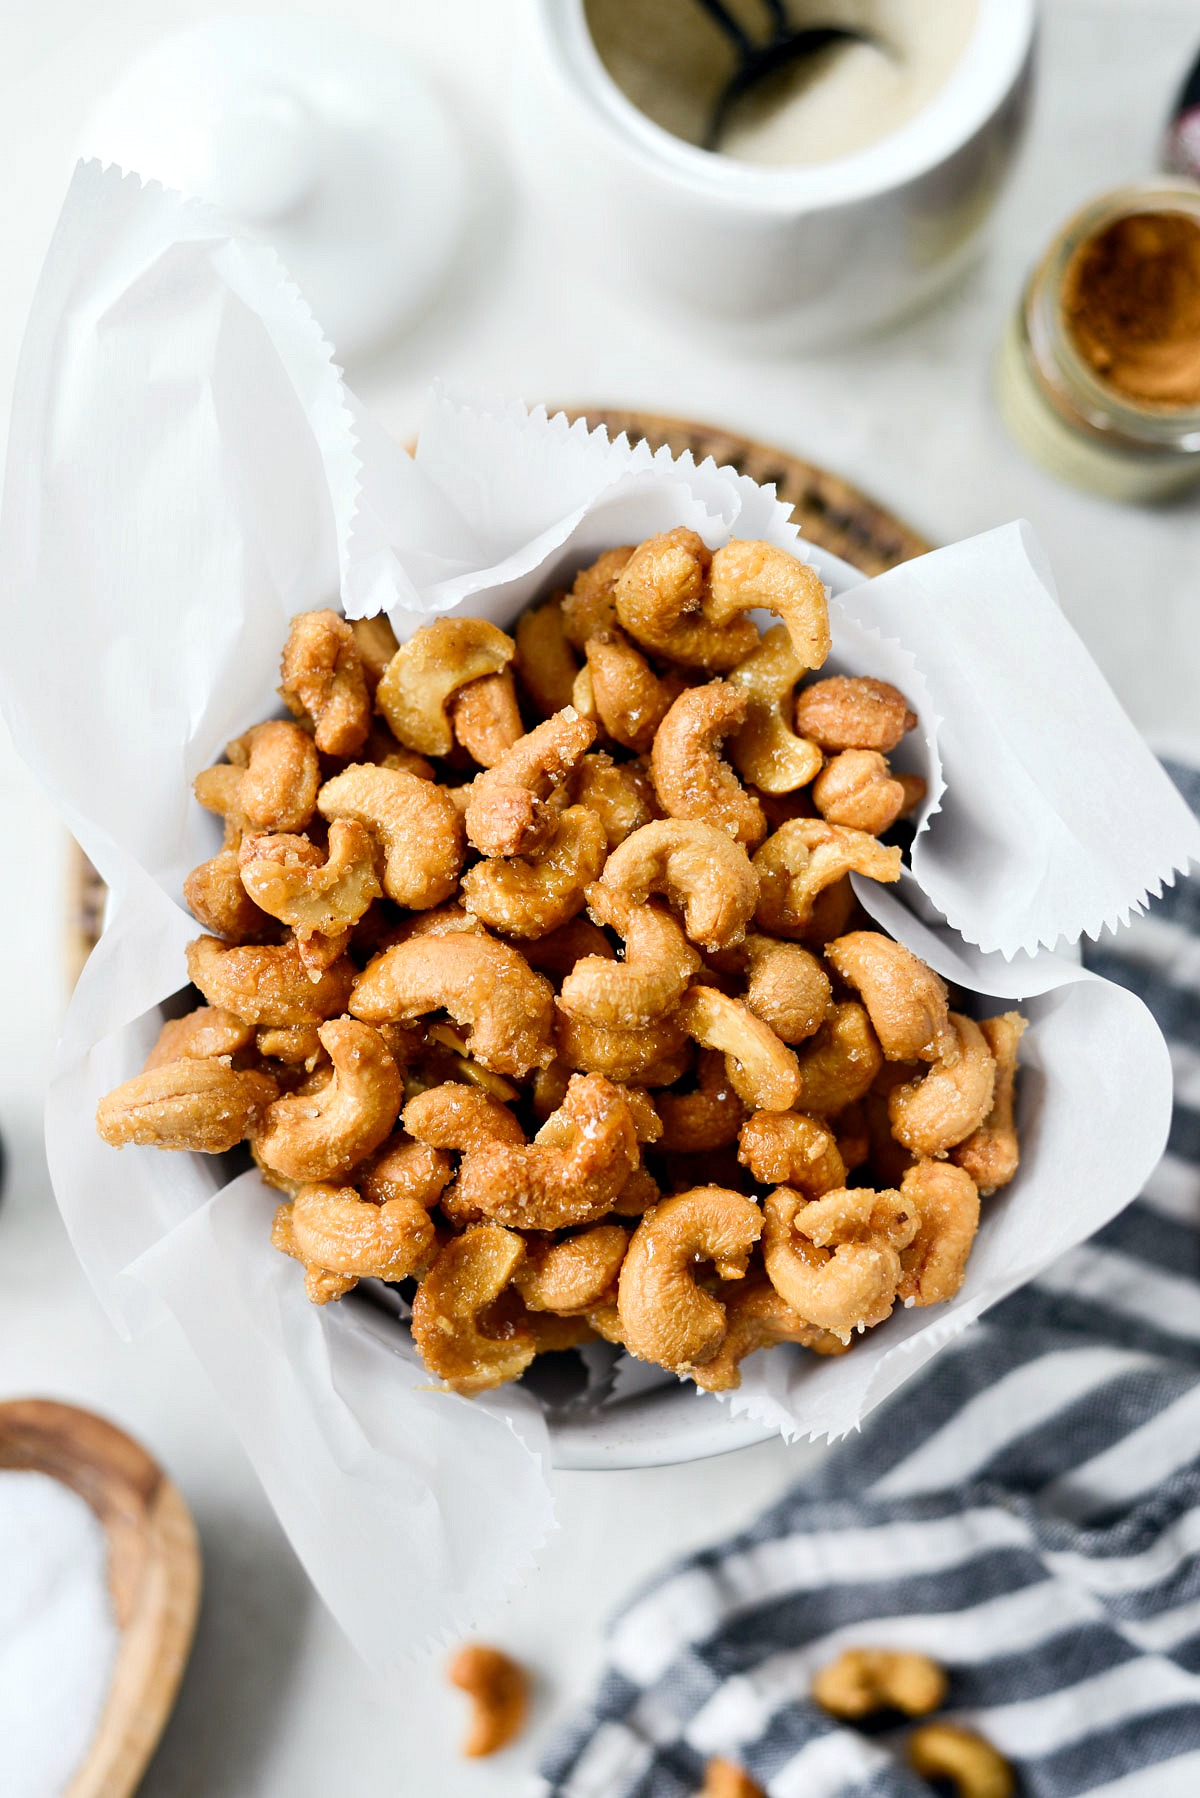 https://www.simplyscratch.com/wp-content/uploads/2019/06/Honey-Roasted-Cashews-l-SimplyScratch.com-honey-maplesyrup-roasted-cashews-sweetandsalty-snack-homemade-19.jpg